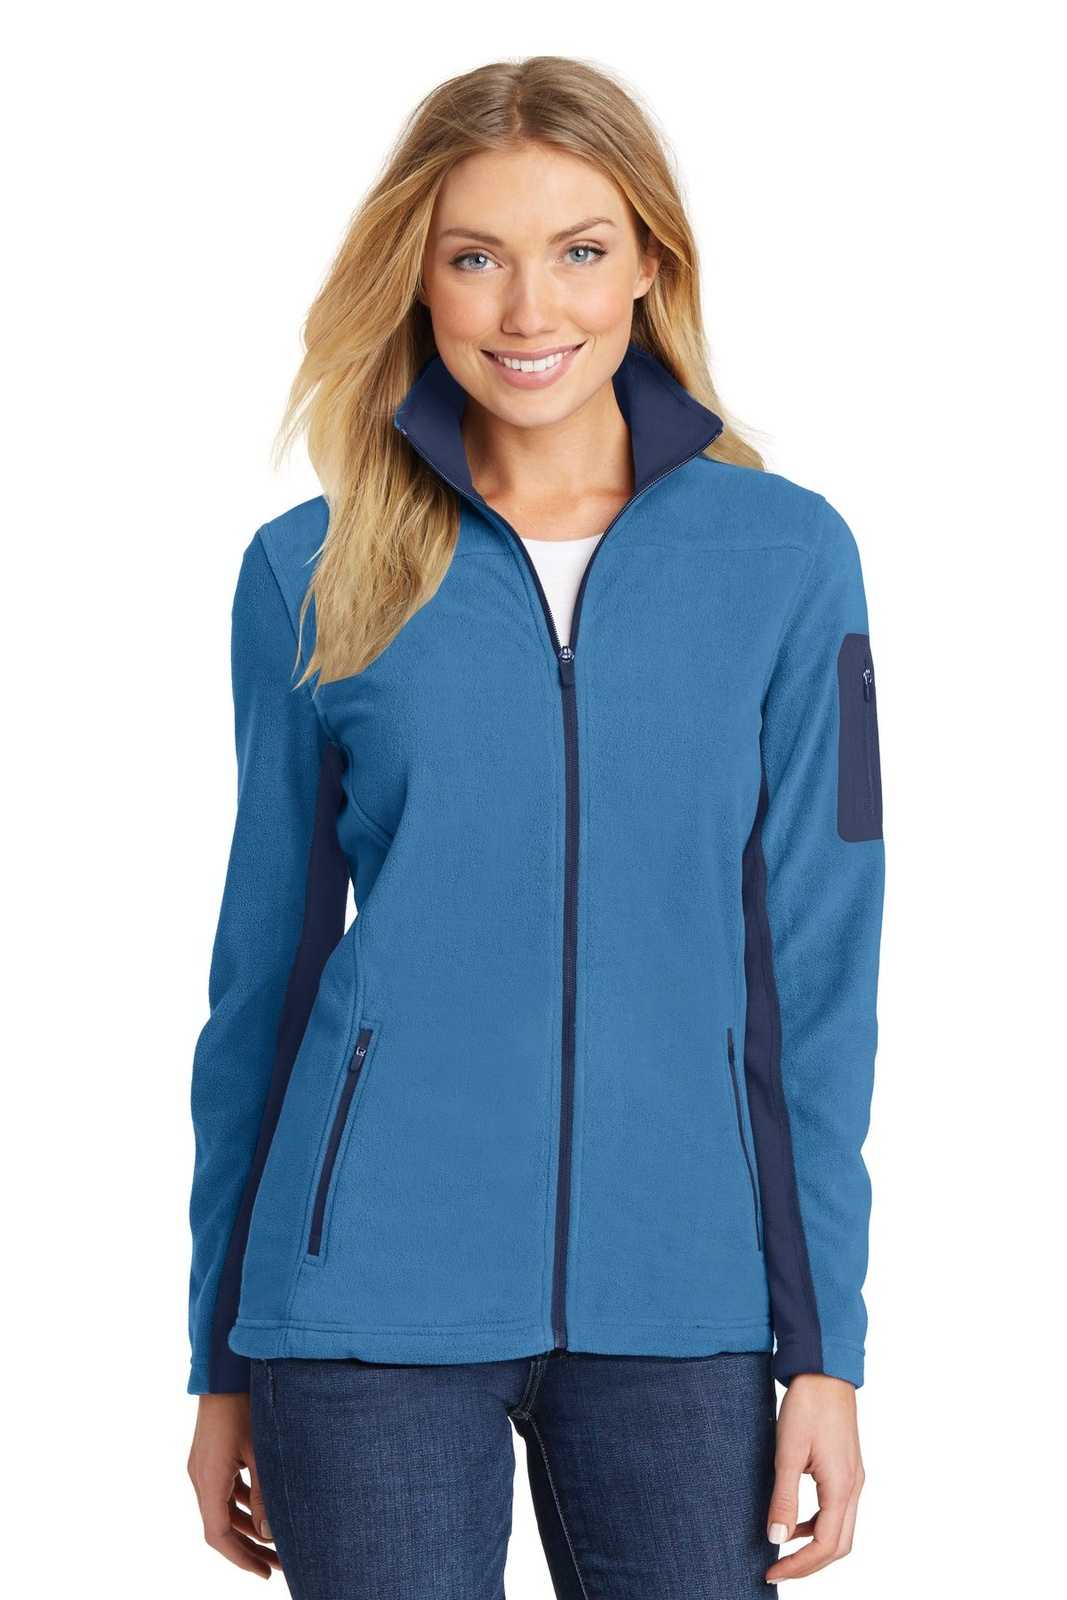 Port Authority L233 Ladies Summit Fleece Full-Zip Jacket - Regal Blue Dress Blue Navy - HIT a Double - 1